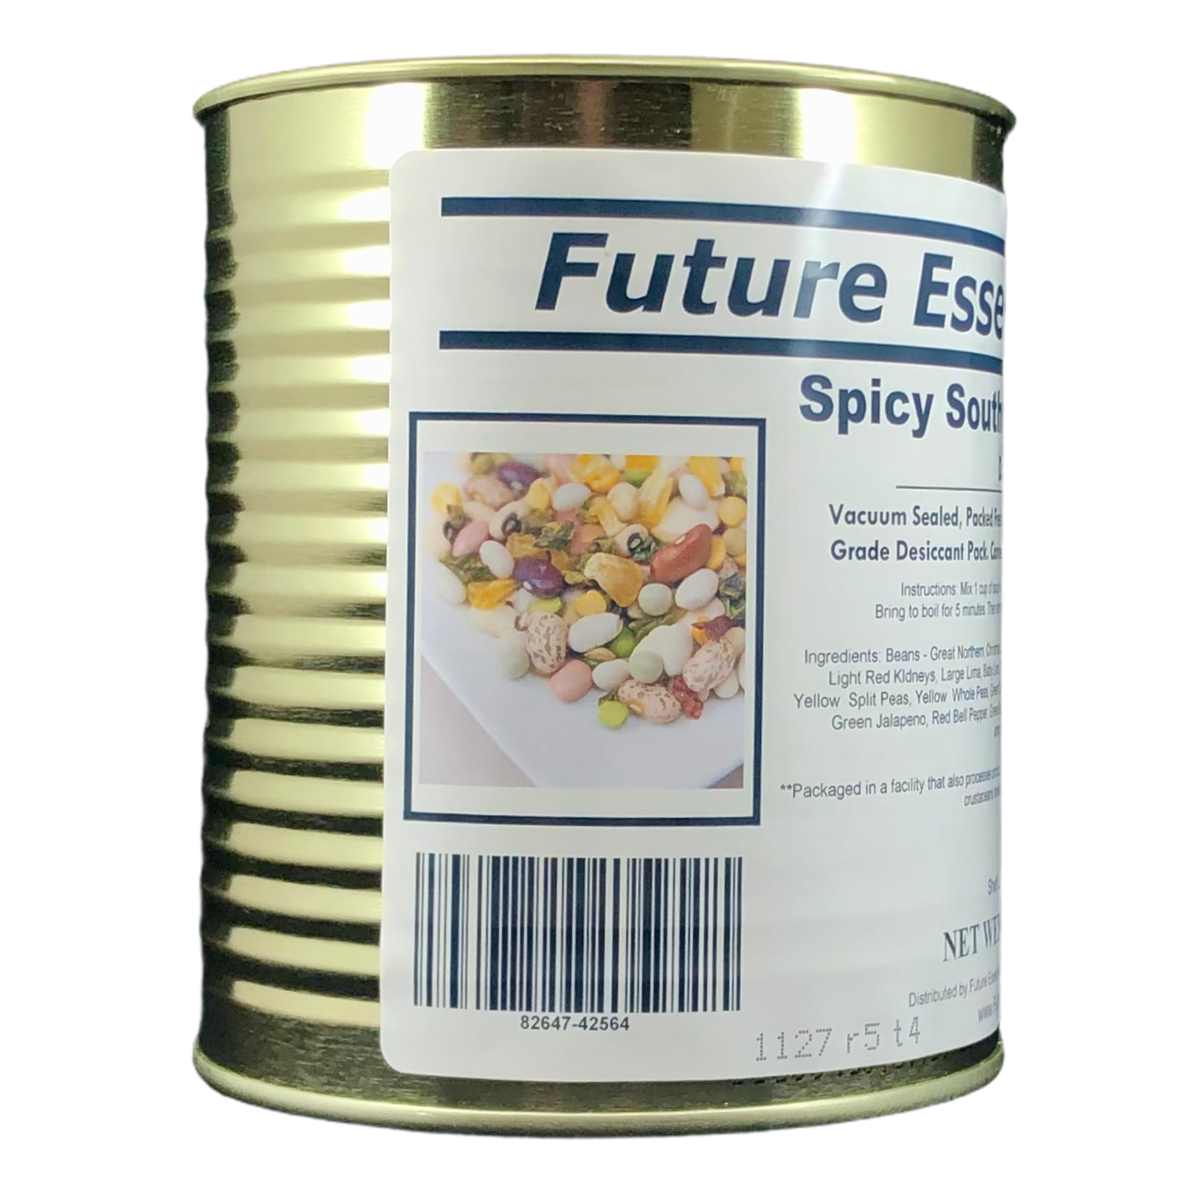 Future Essentials Spicy Southwestern Soup